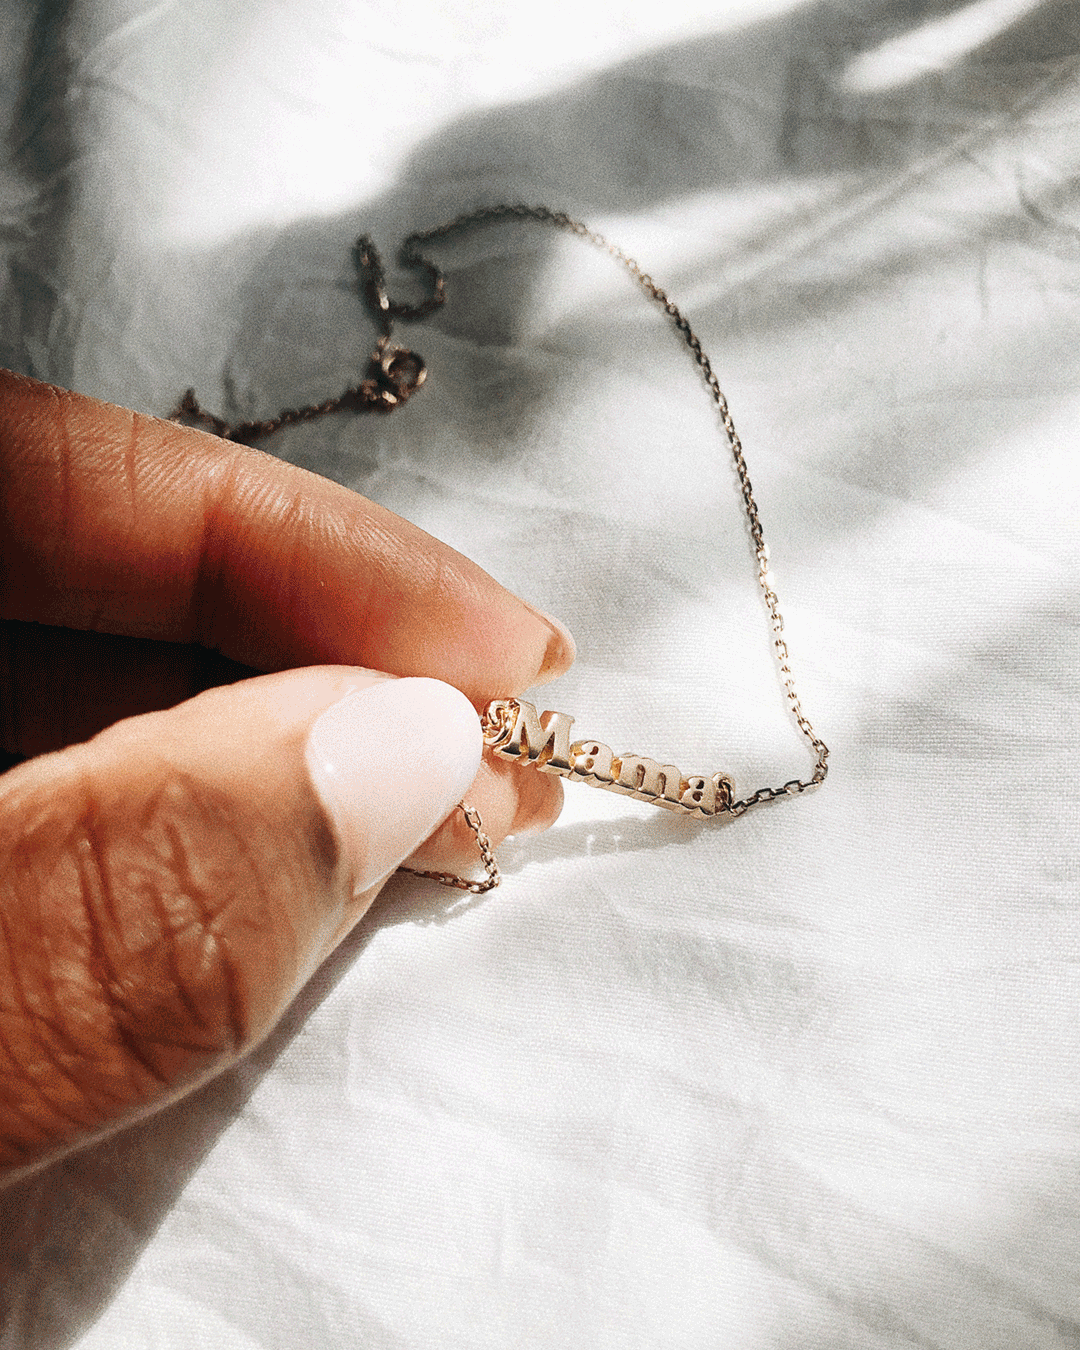 Mama Necklace - Bing Bang Jewelry NYC